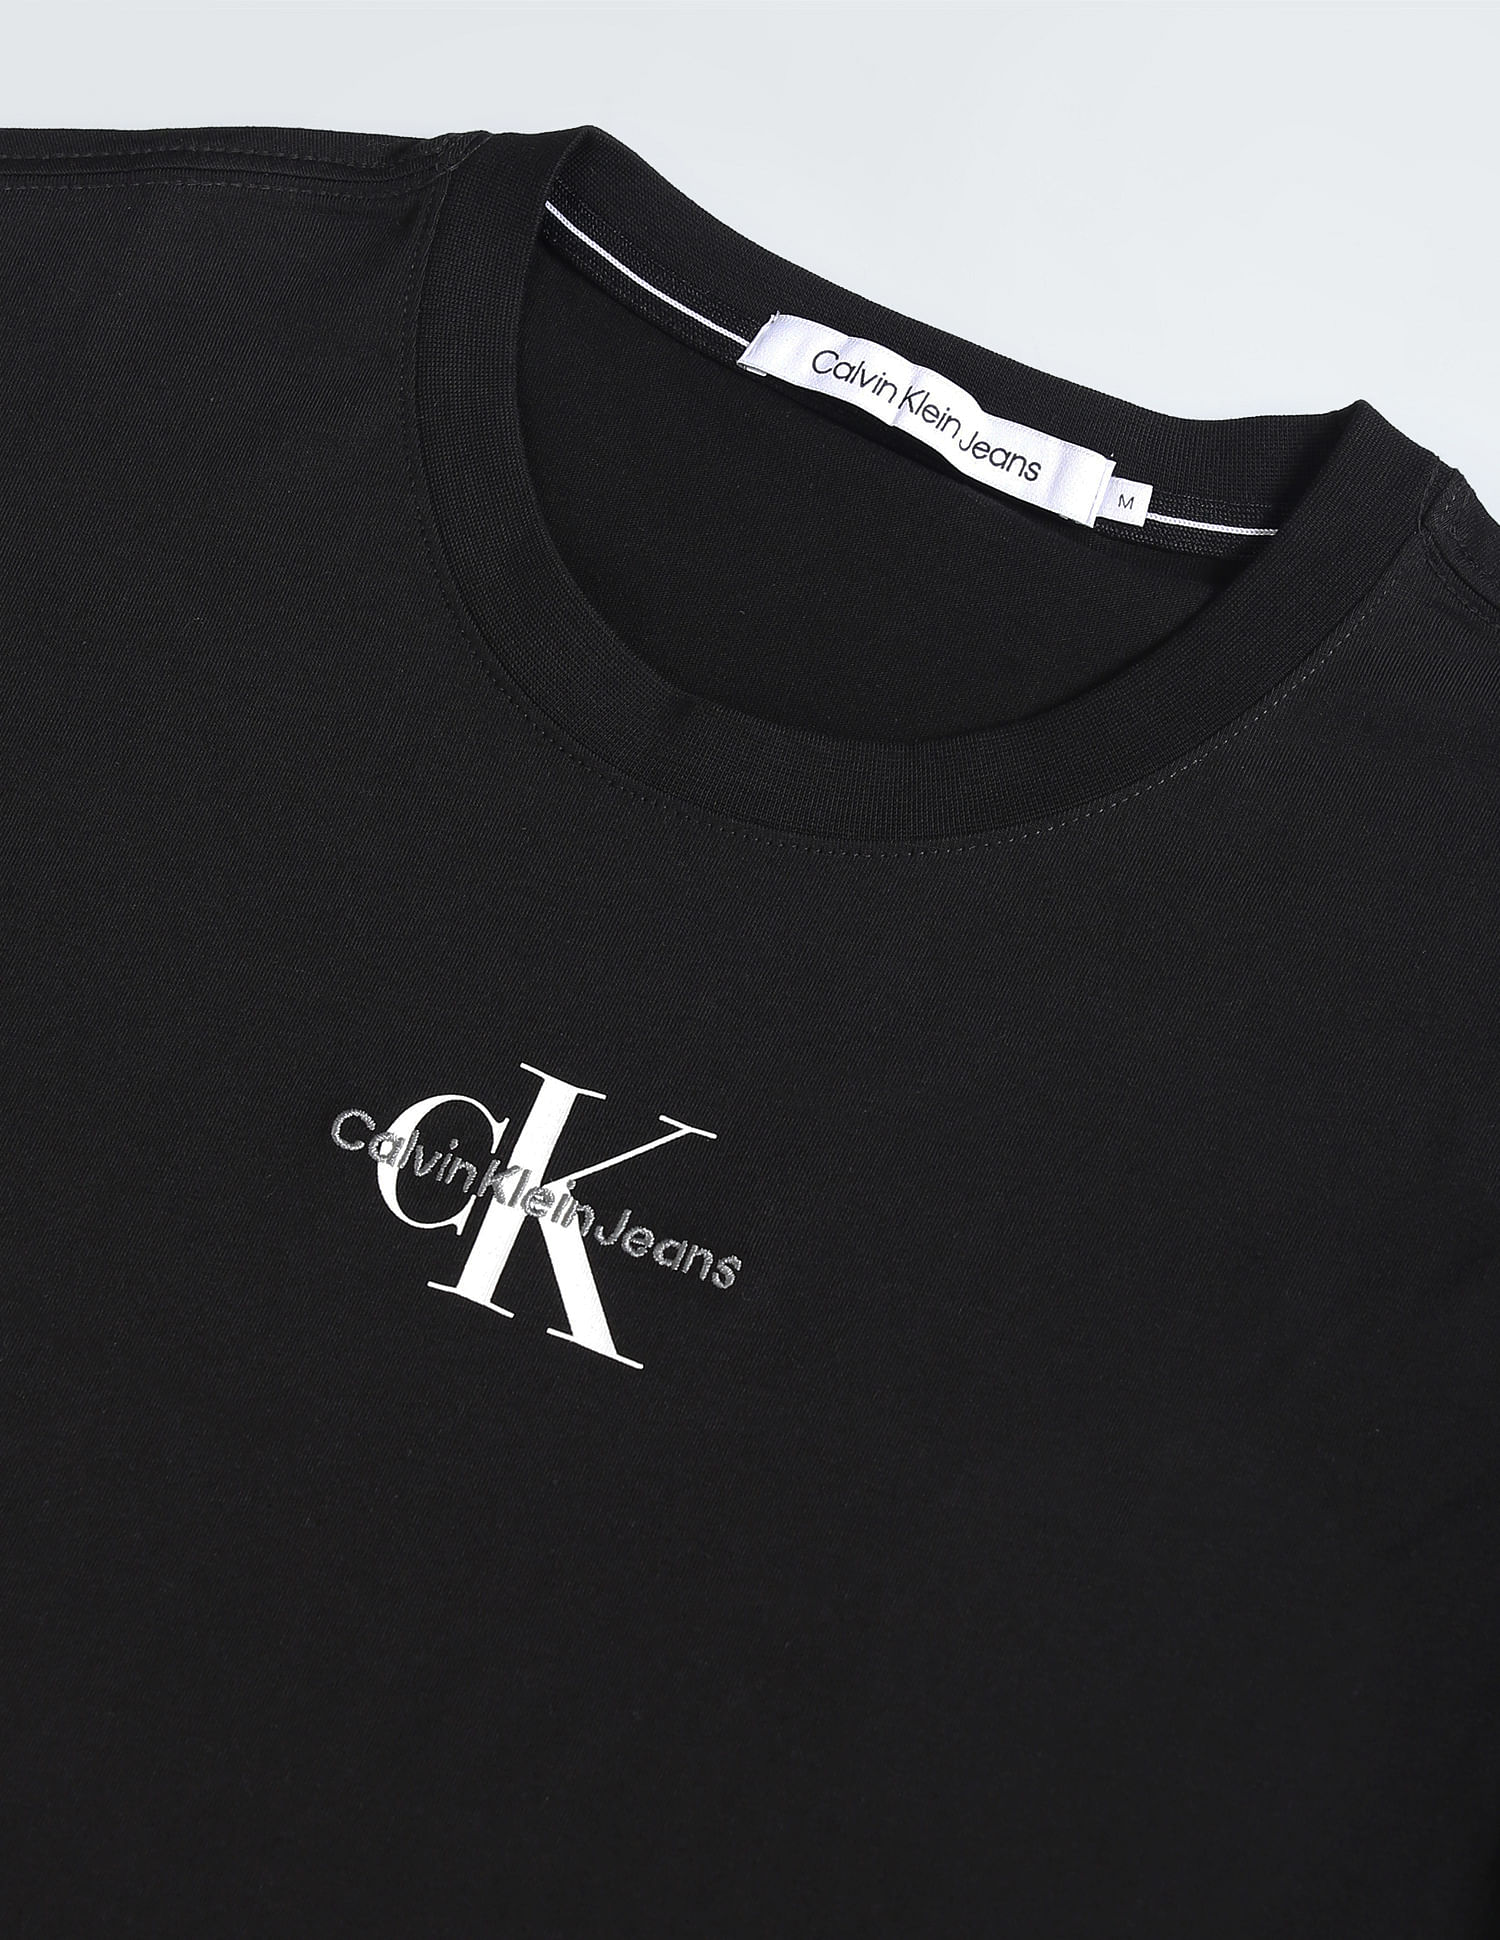 Calvin Klein Jeans logo tape shoulder t-shirt in black, ASOS